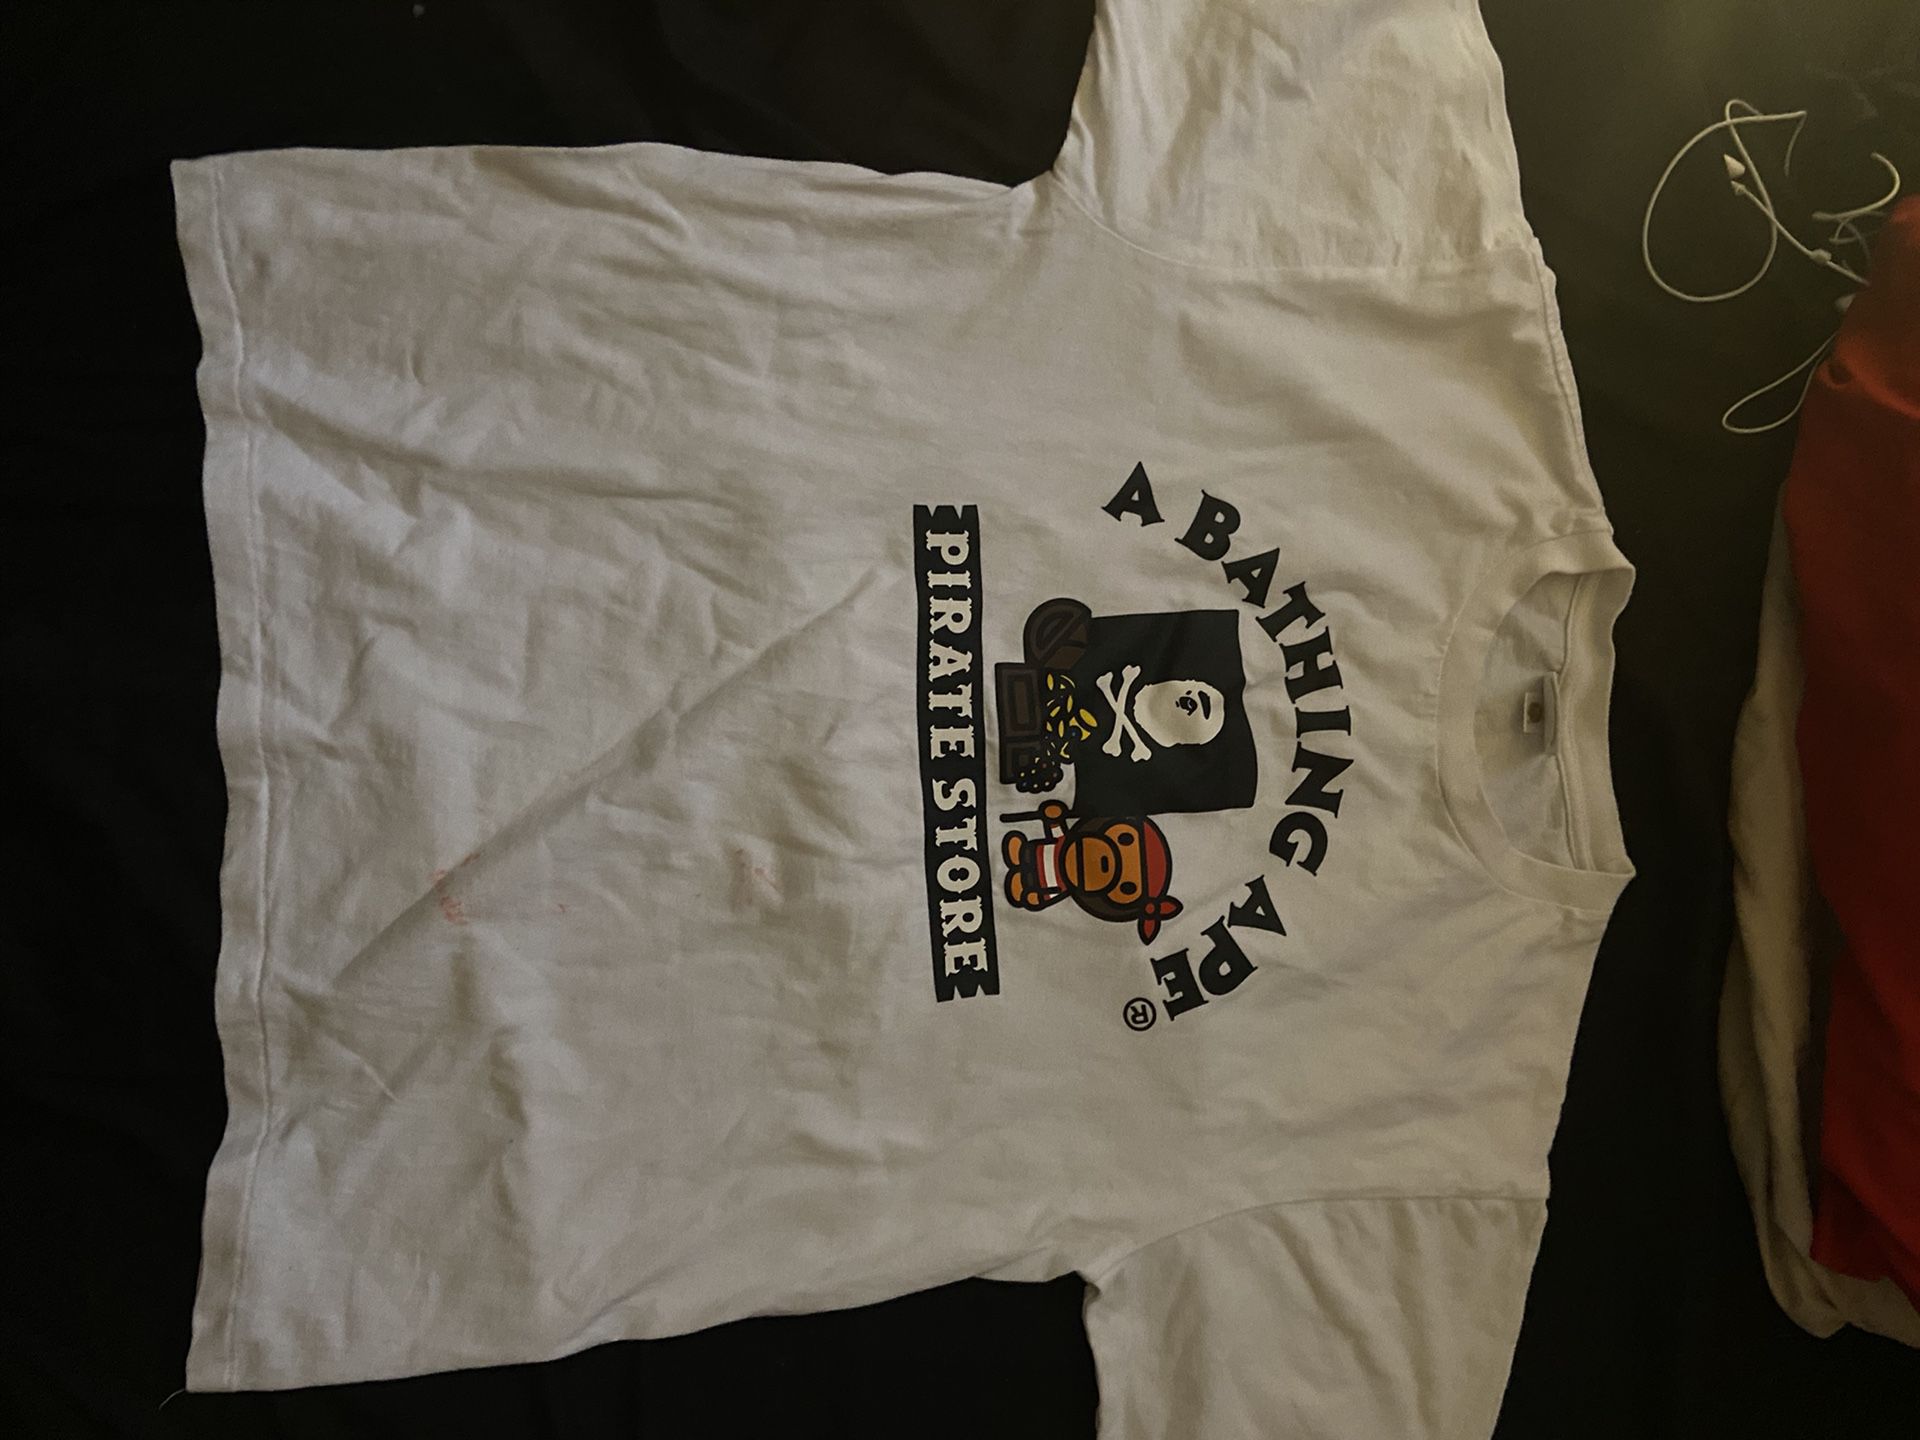 Bape shirt (pirate store)